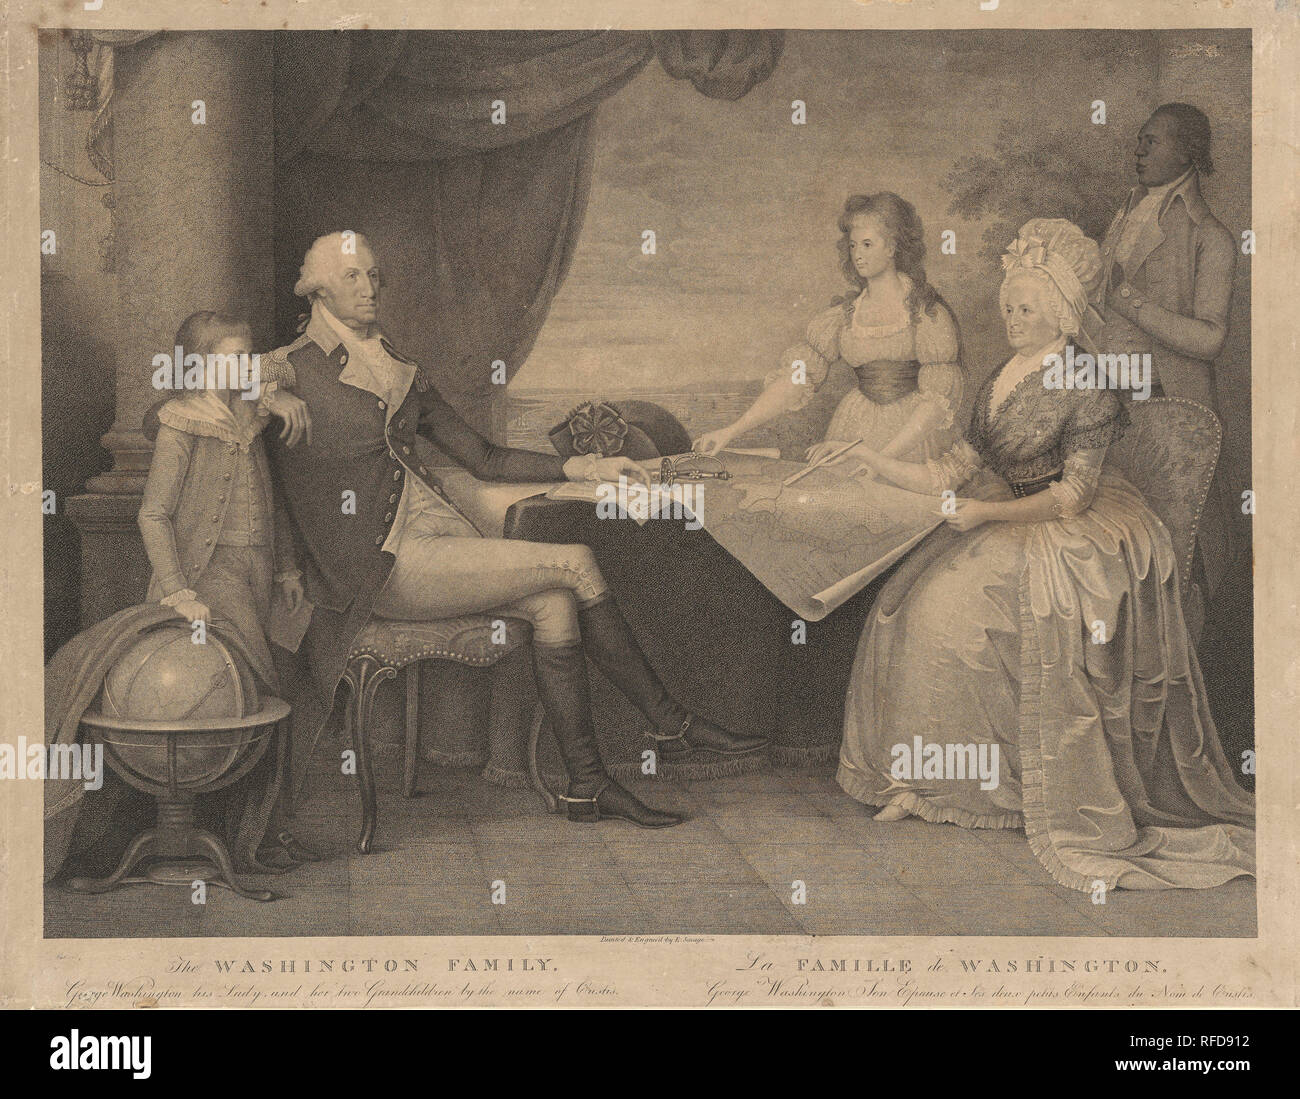 The Washington Family. Dimensions: image: 47.94 x 62.39 cm (18 7/8 x 24 9/16 in.)  sheet: 53.02 x 69.06 cm (20 7/8 x 27 3/16 in.). Medium: engraving. Museum: National Gallery of Art, Washington DC. Author: Edward Savage. Stock Photo